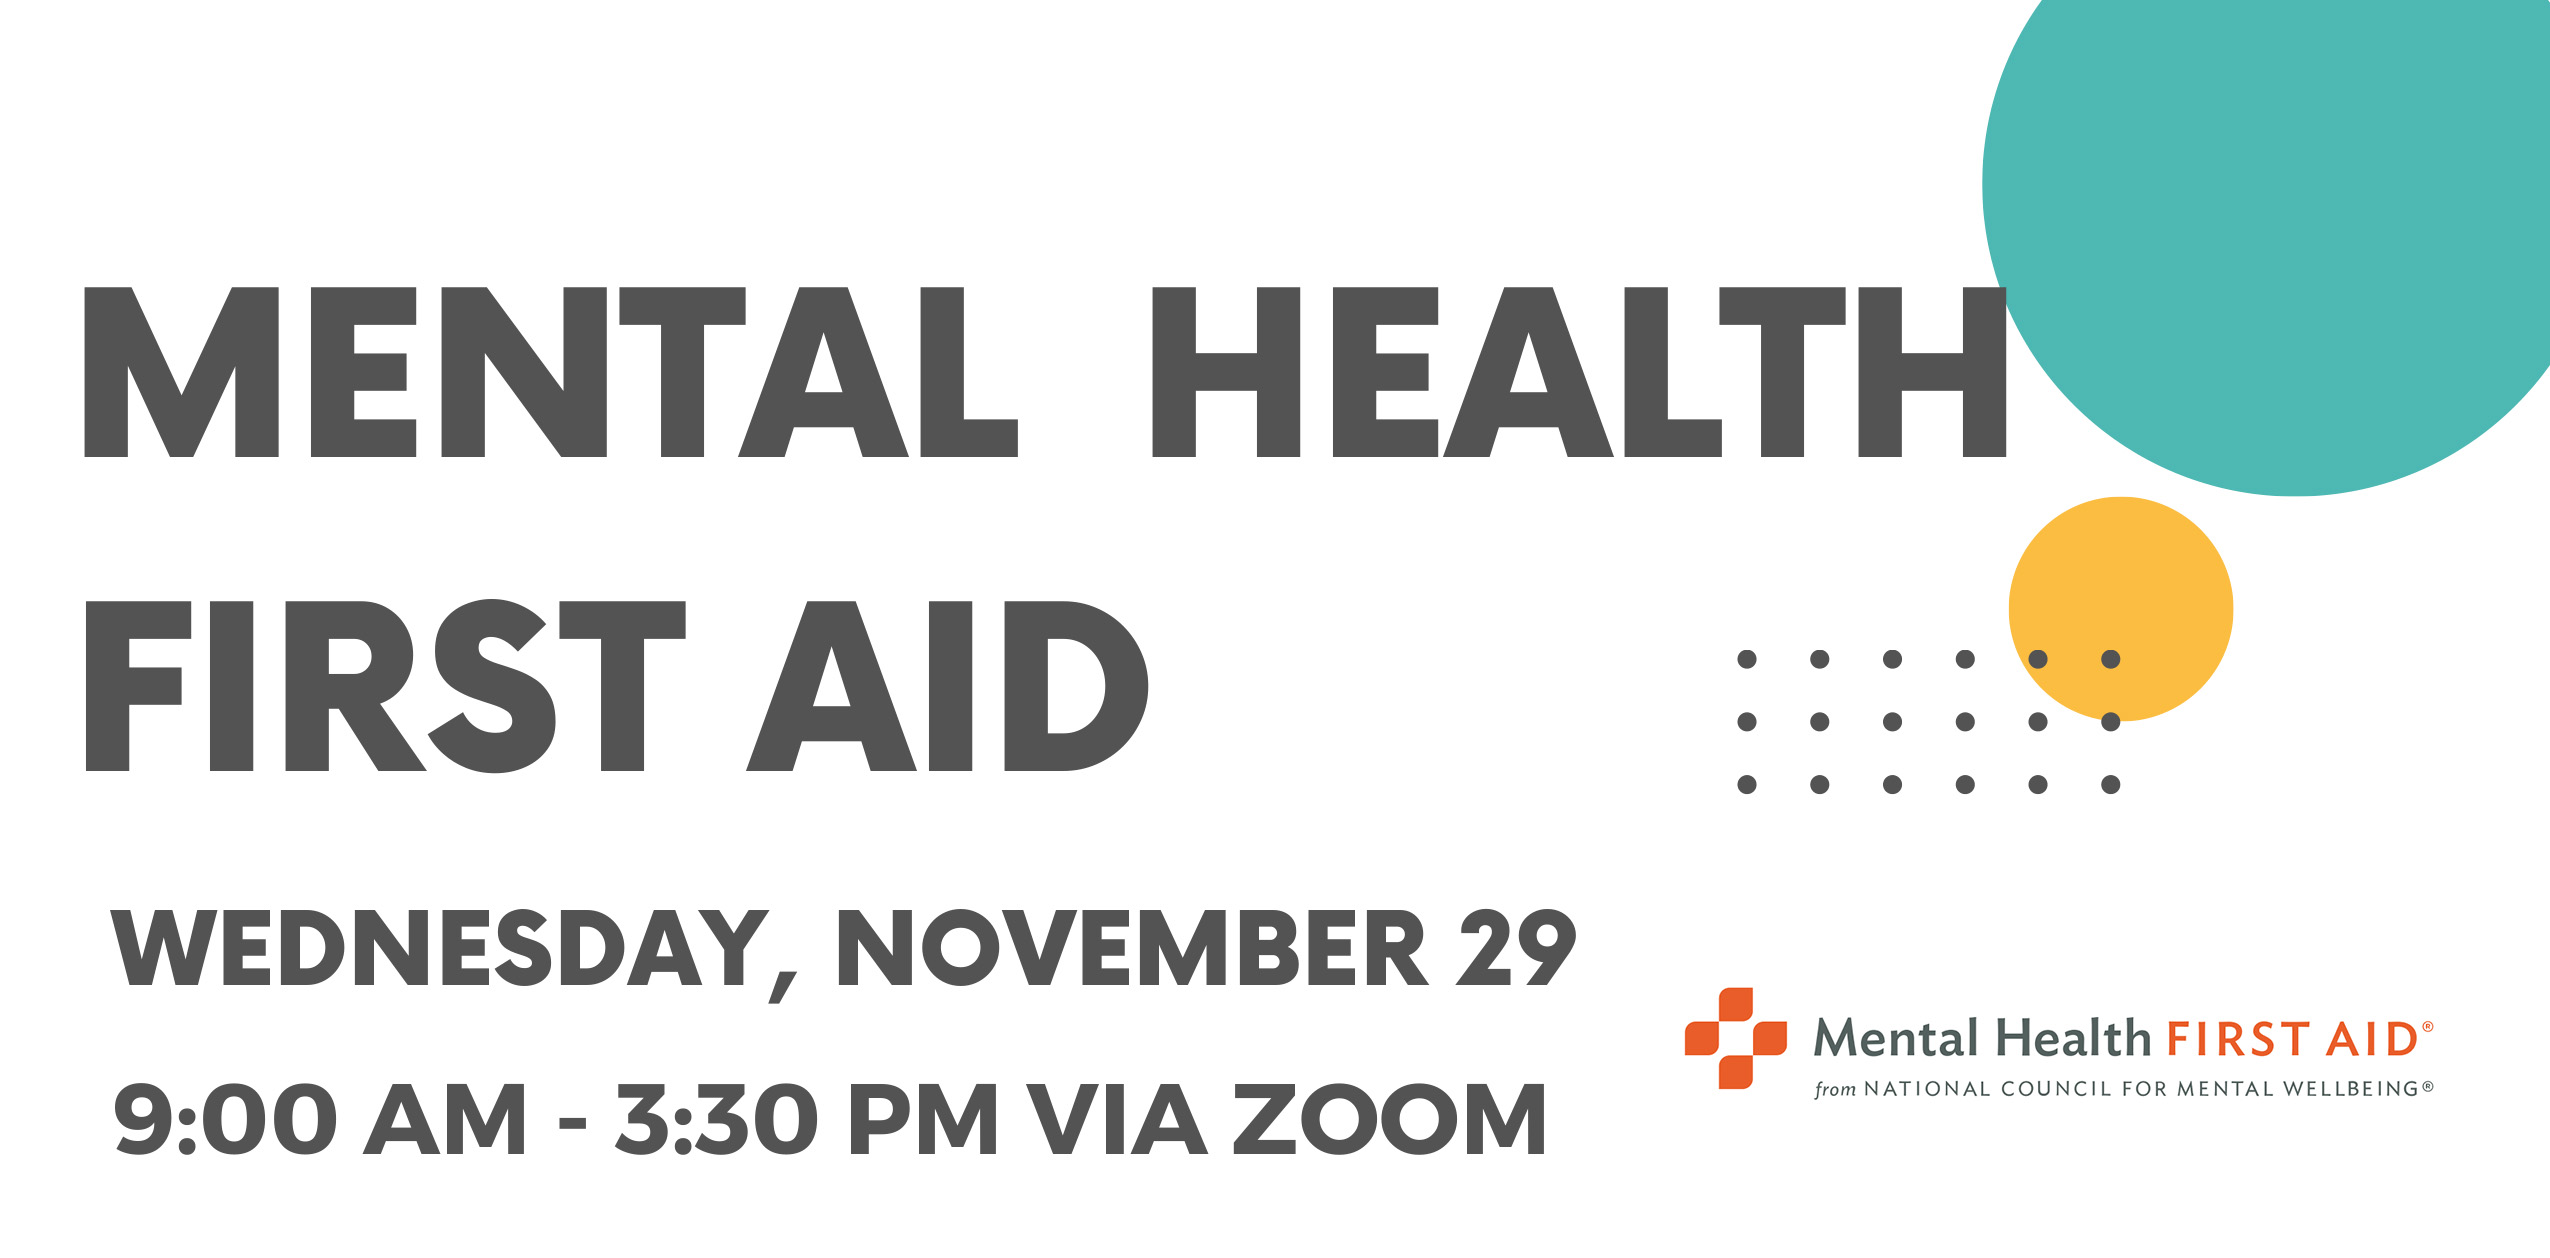 Mental Health First Aid Wednesday, November 29, 9 a.m. to 3:30 p.m. via Zoom